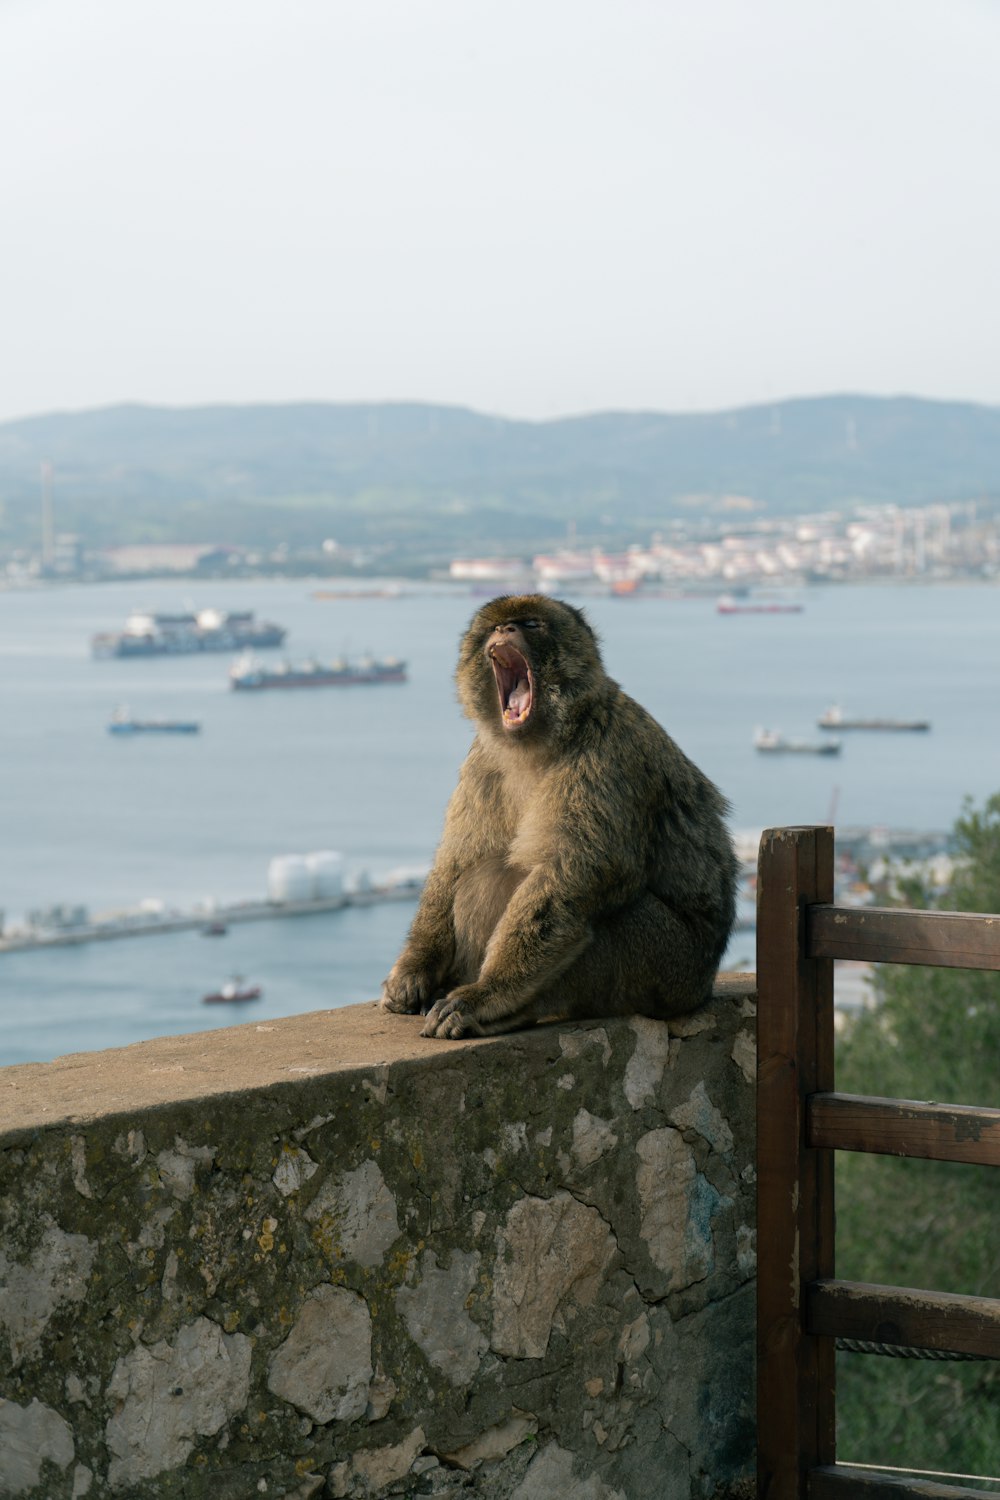 a monkey yawns while sitting on a stone wall